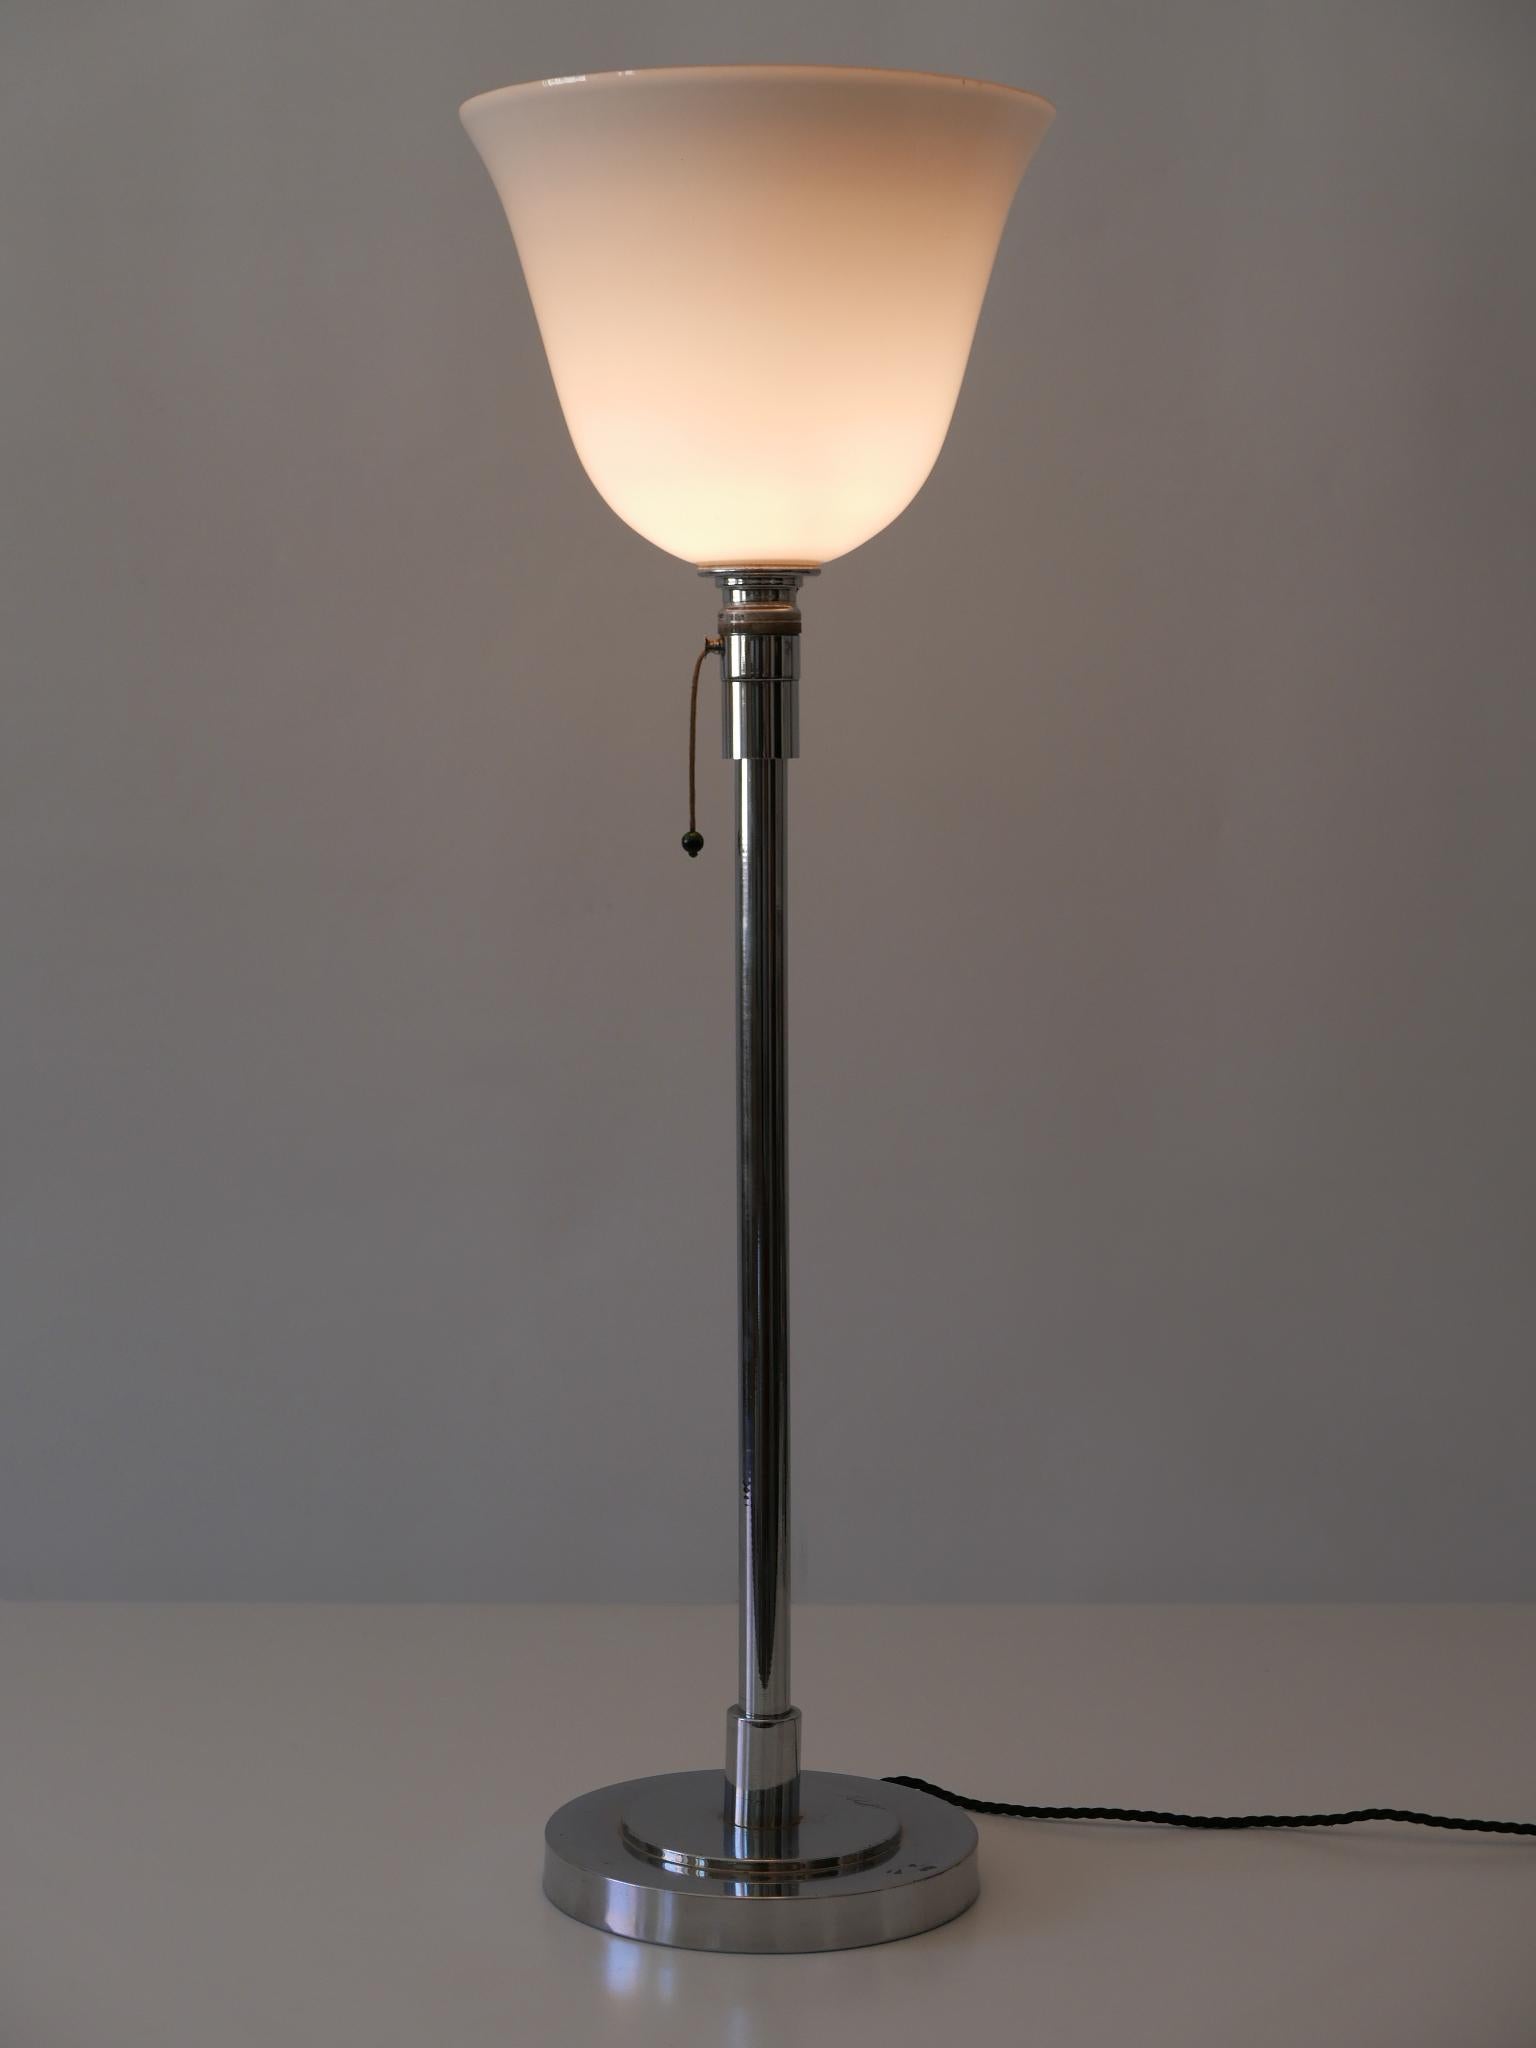 Brass Elegant Art Deco Bauhaus Table Lamp or Floor Light by Mazda Paris, France, 1930s For Sale